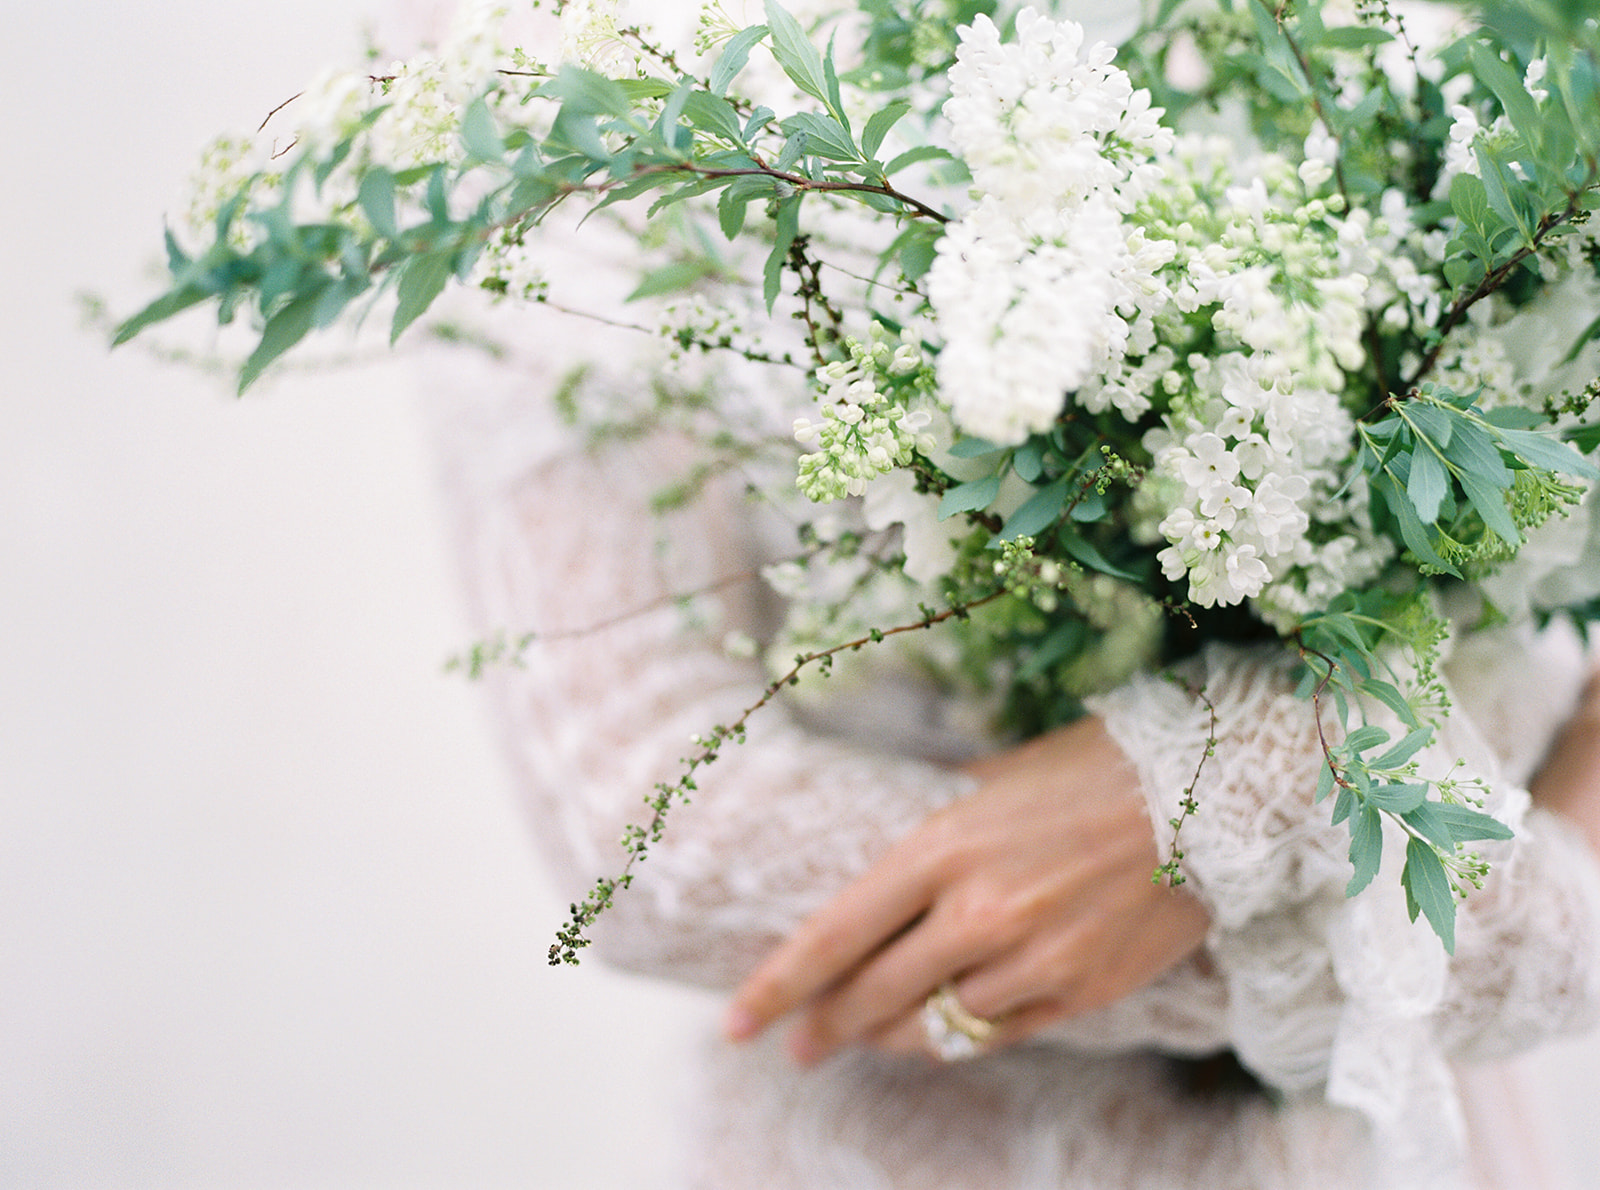 White & Green Wedding Bouquet: Florals by Plenty of Petals - Katarzyna Walker
Luxury Film Photographer Elizabeth Selena 